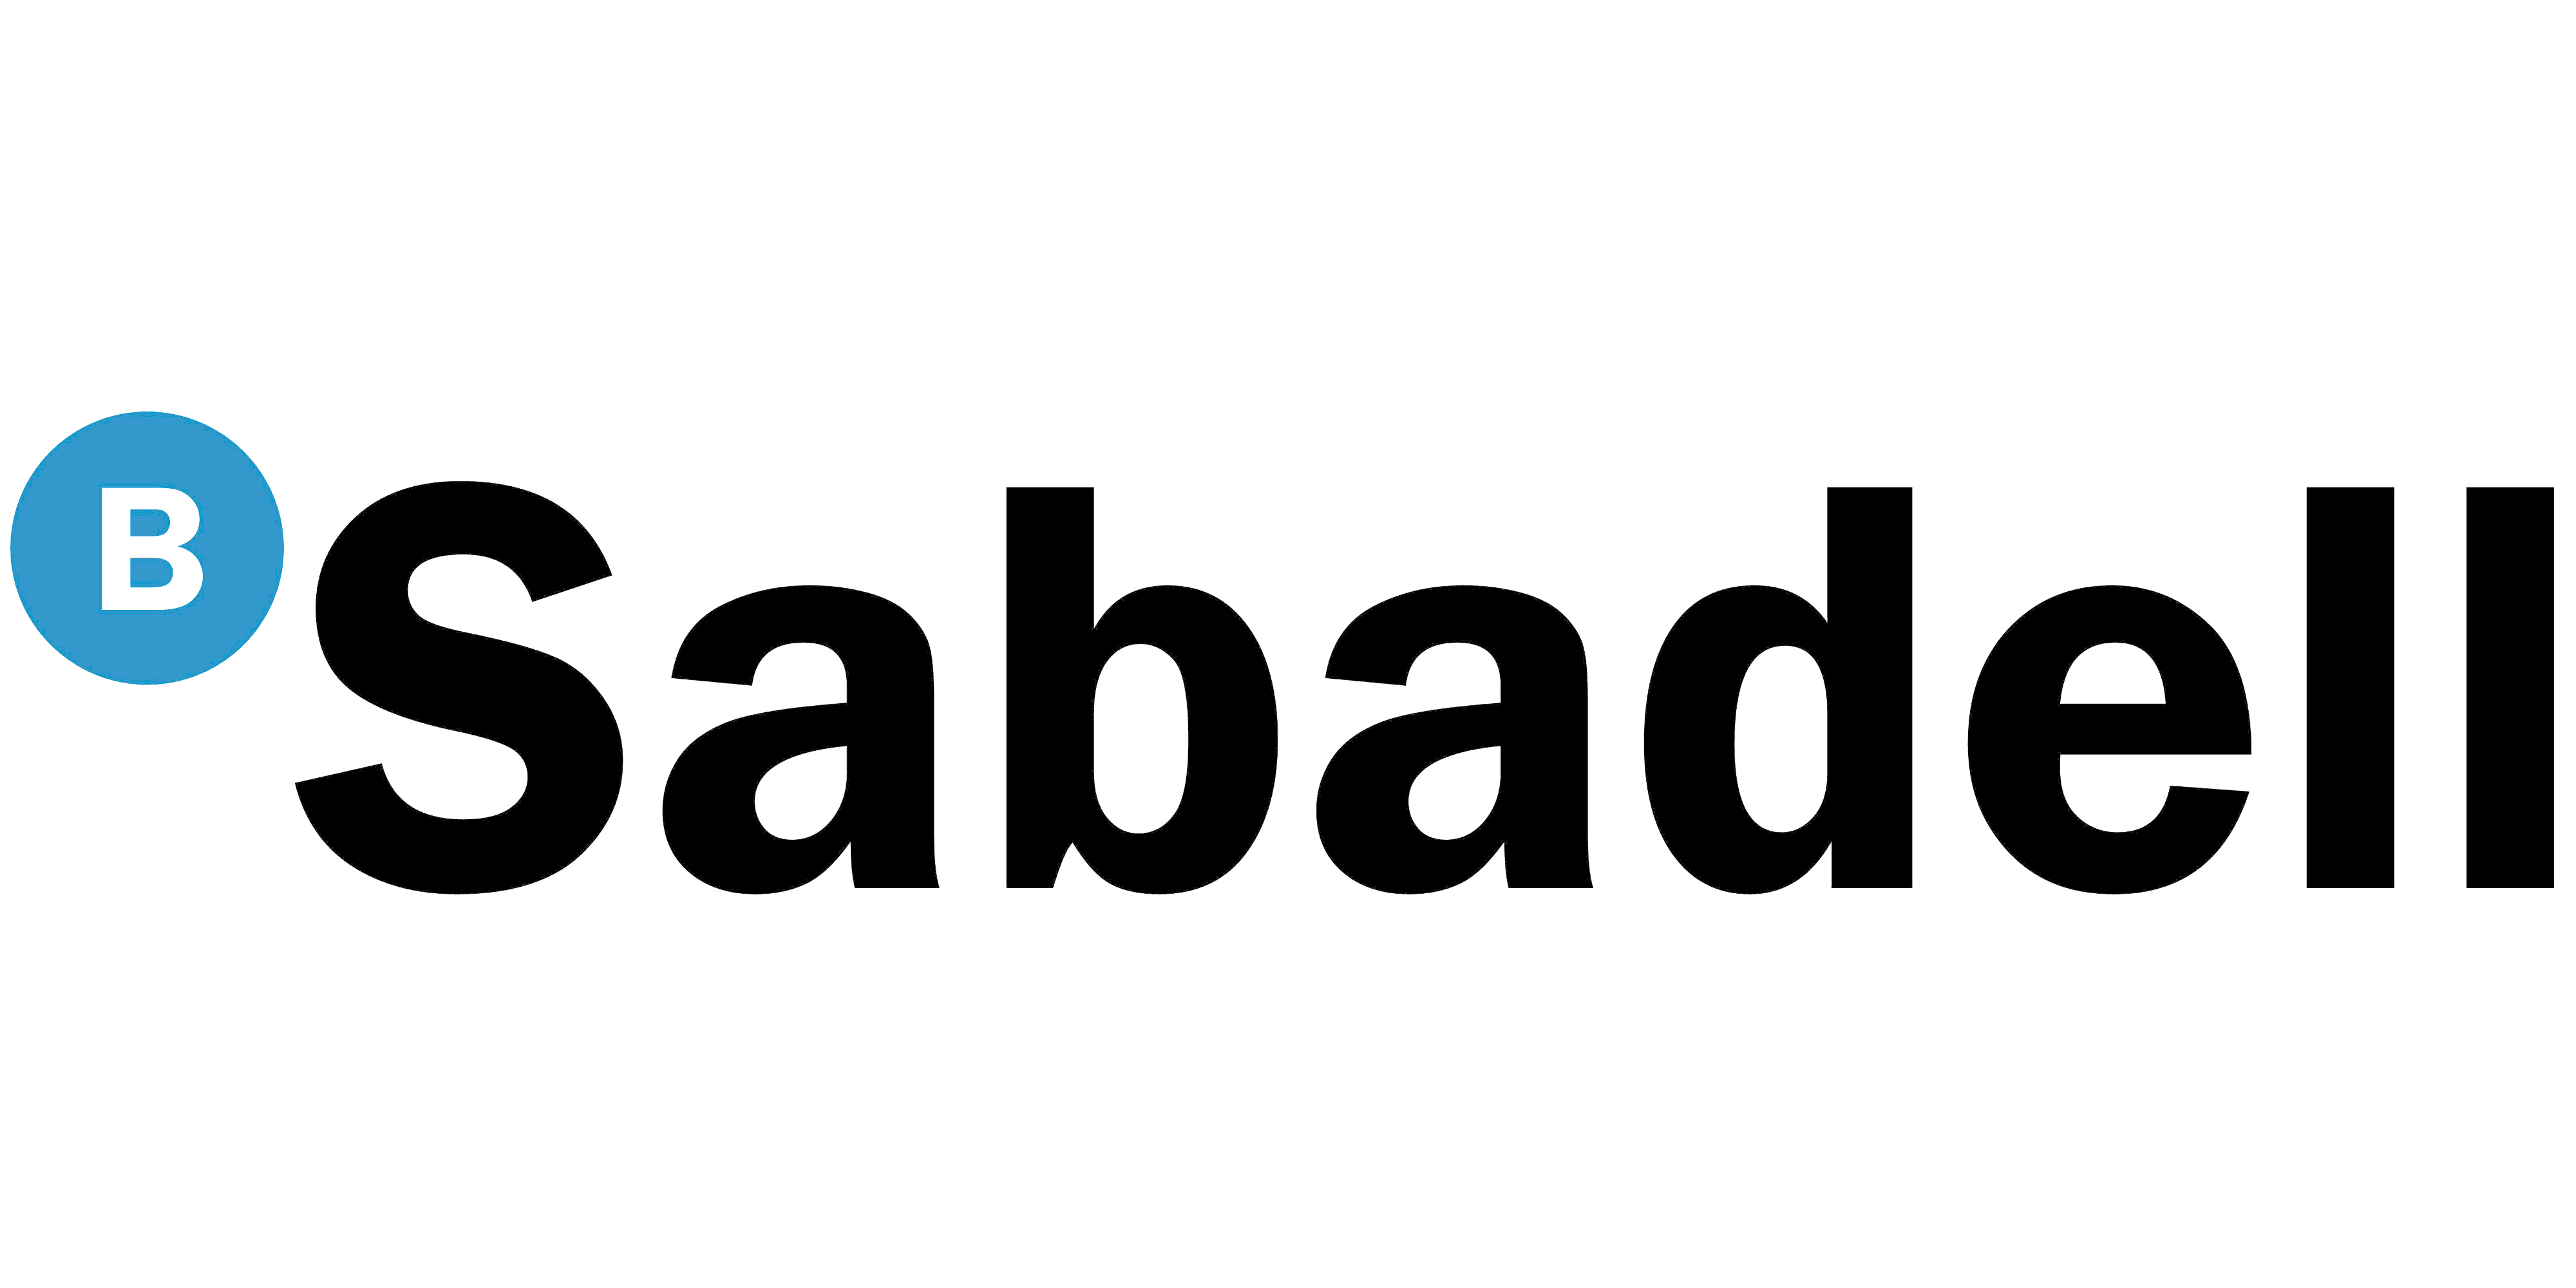 Banc Sabadell Logo photo - 1